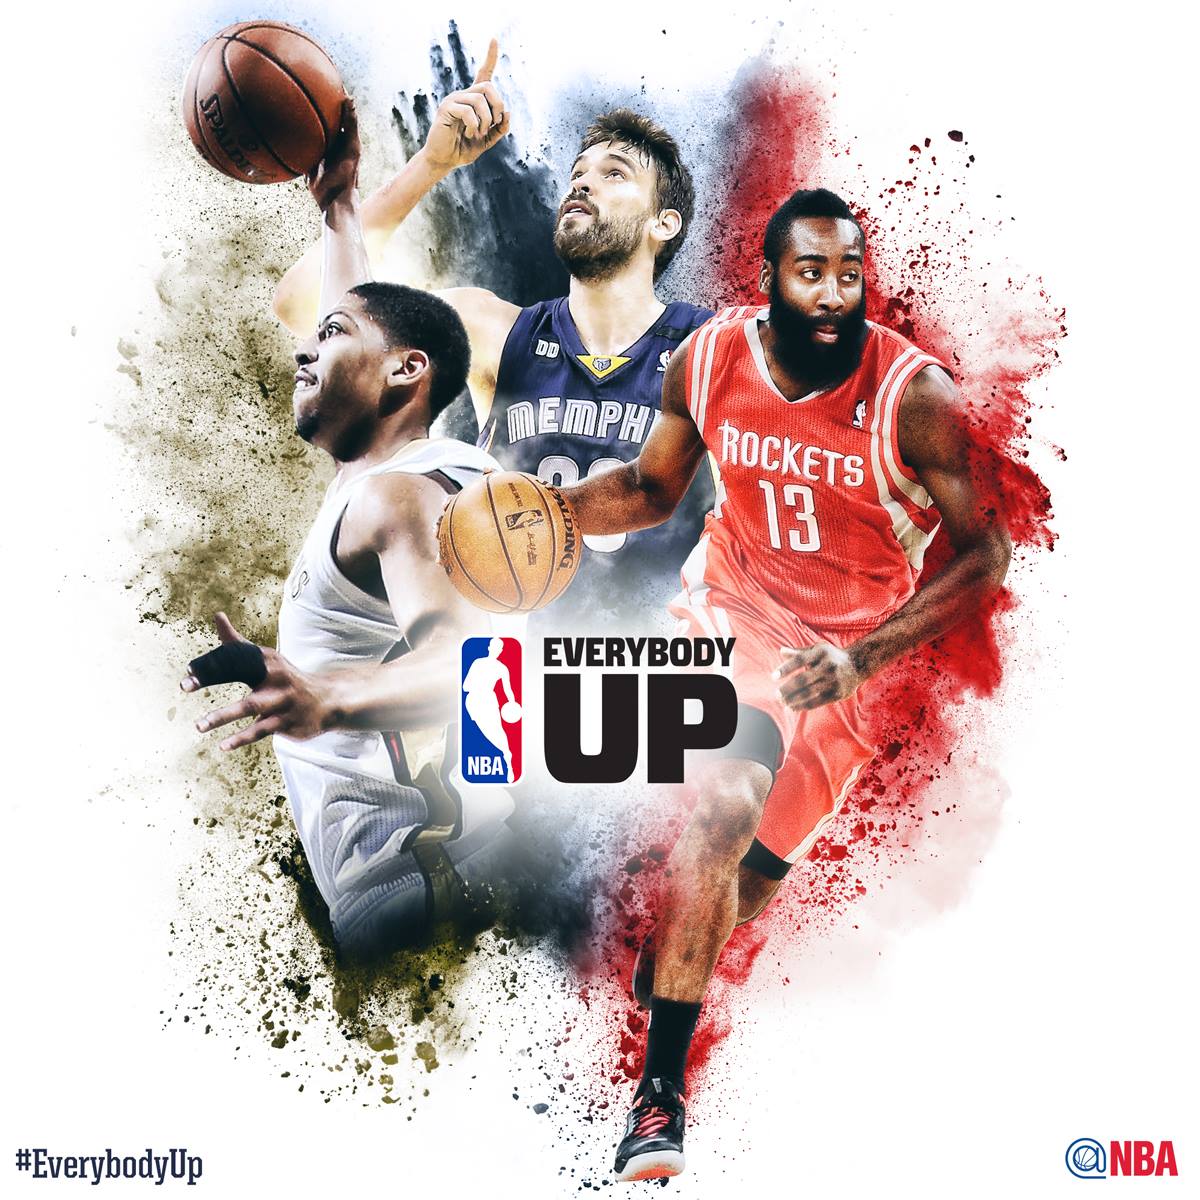 NBA Everywhere Instagram artwork for the NBA